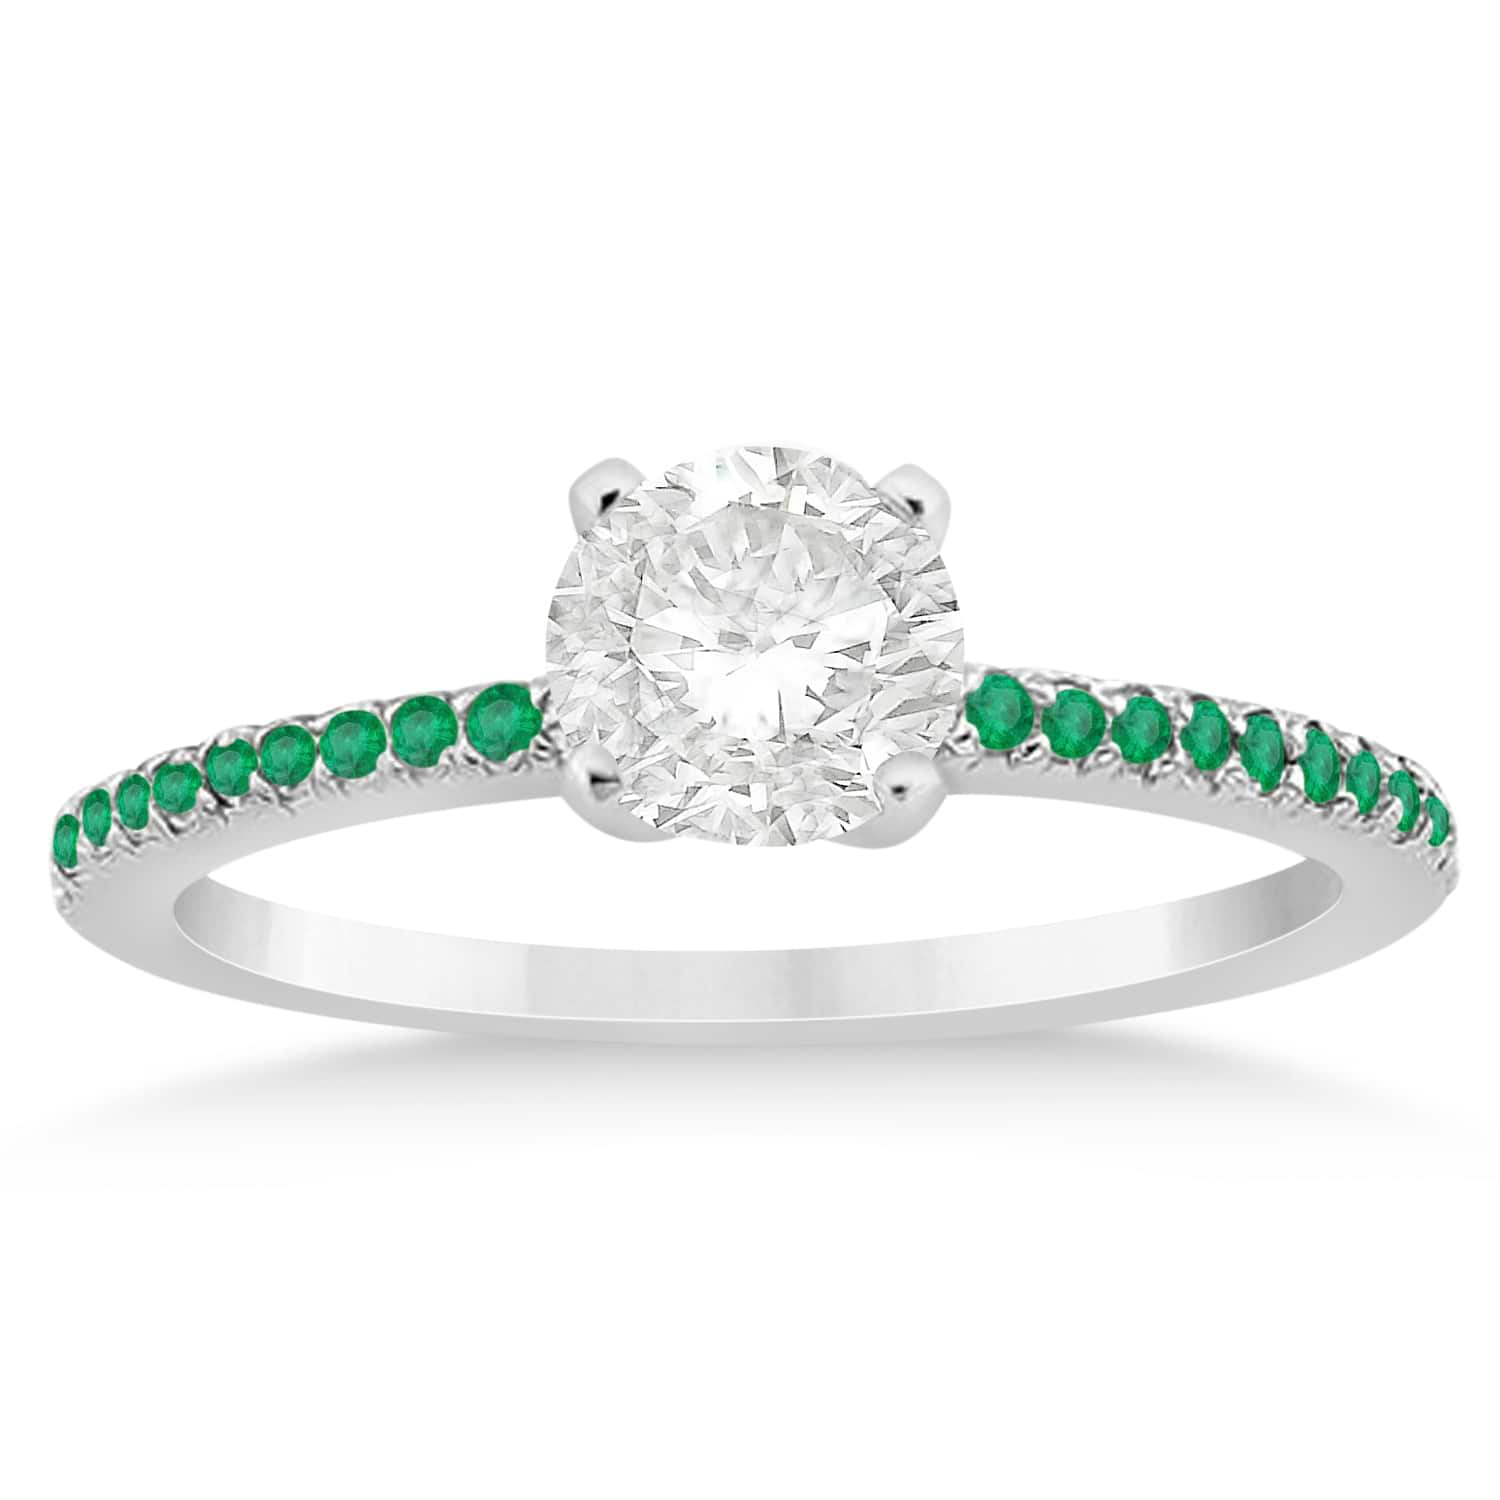 Emerald Accented Engagement Ring Setting Palladium 0.18ct